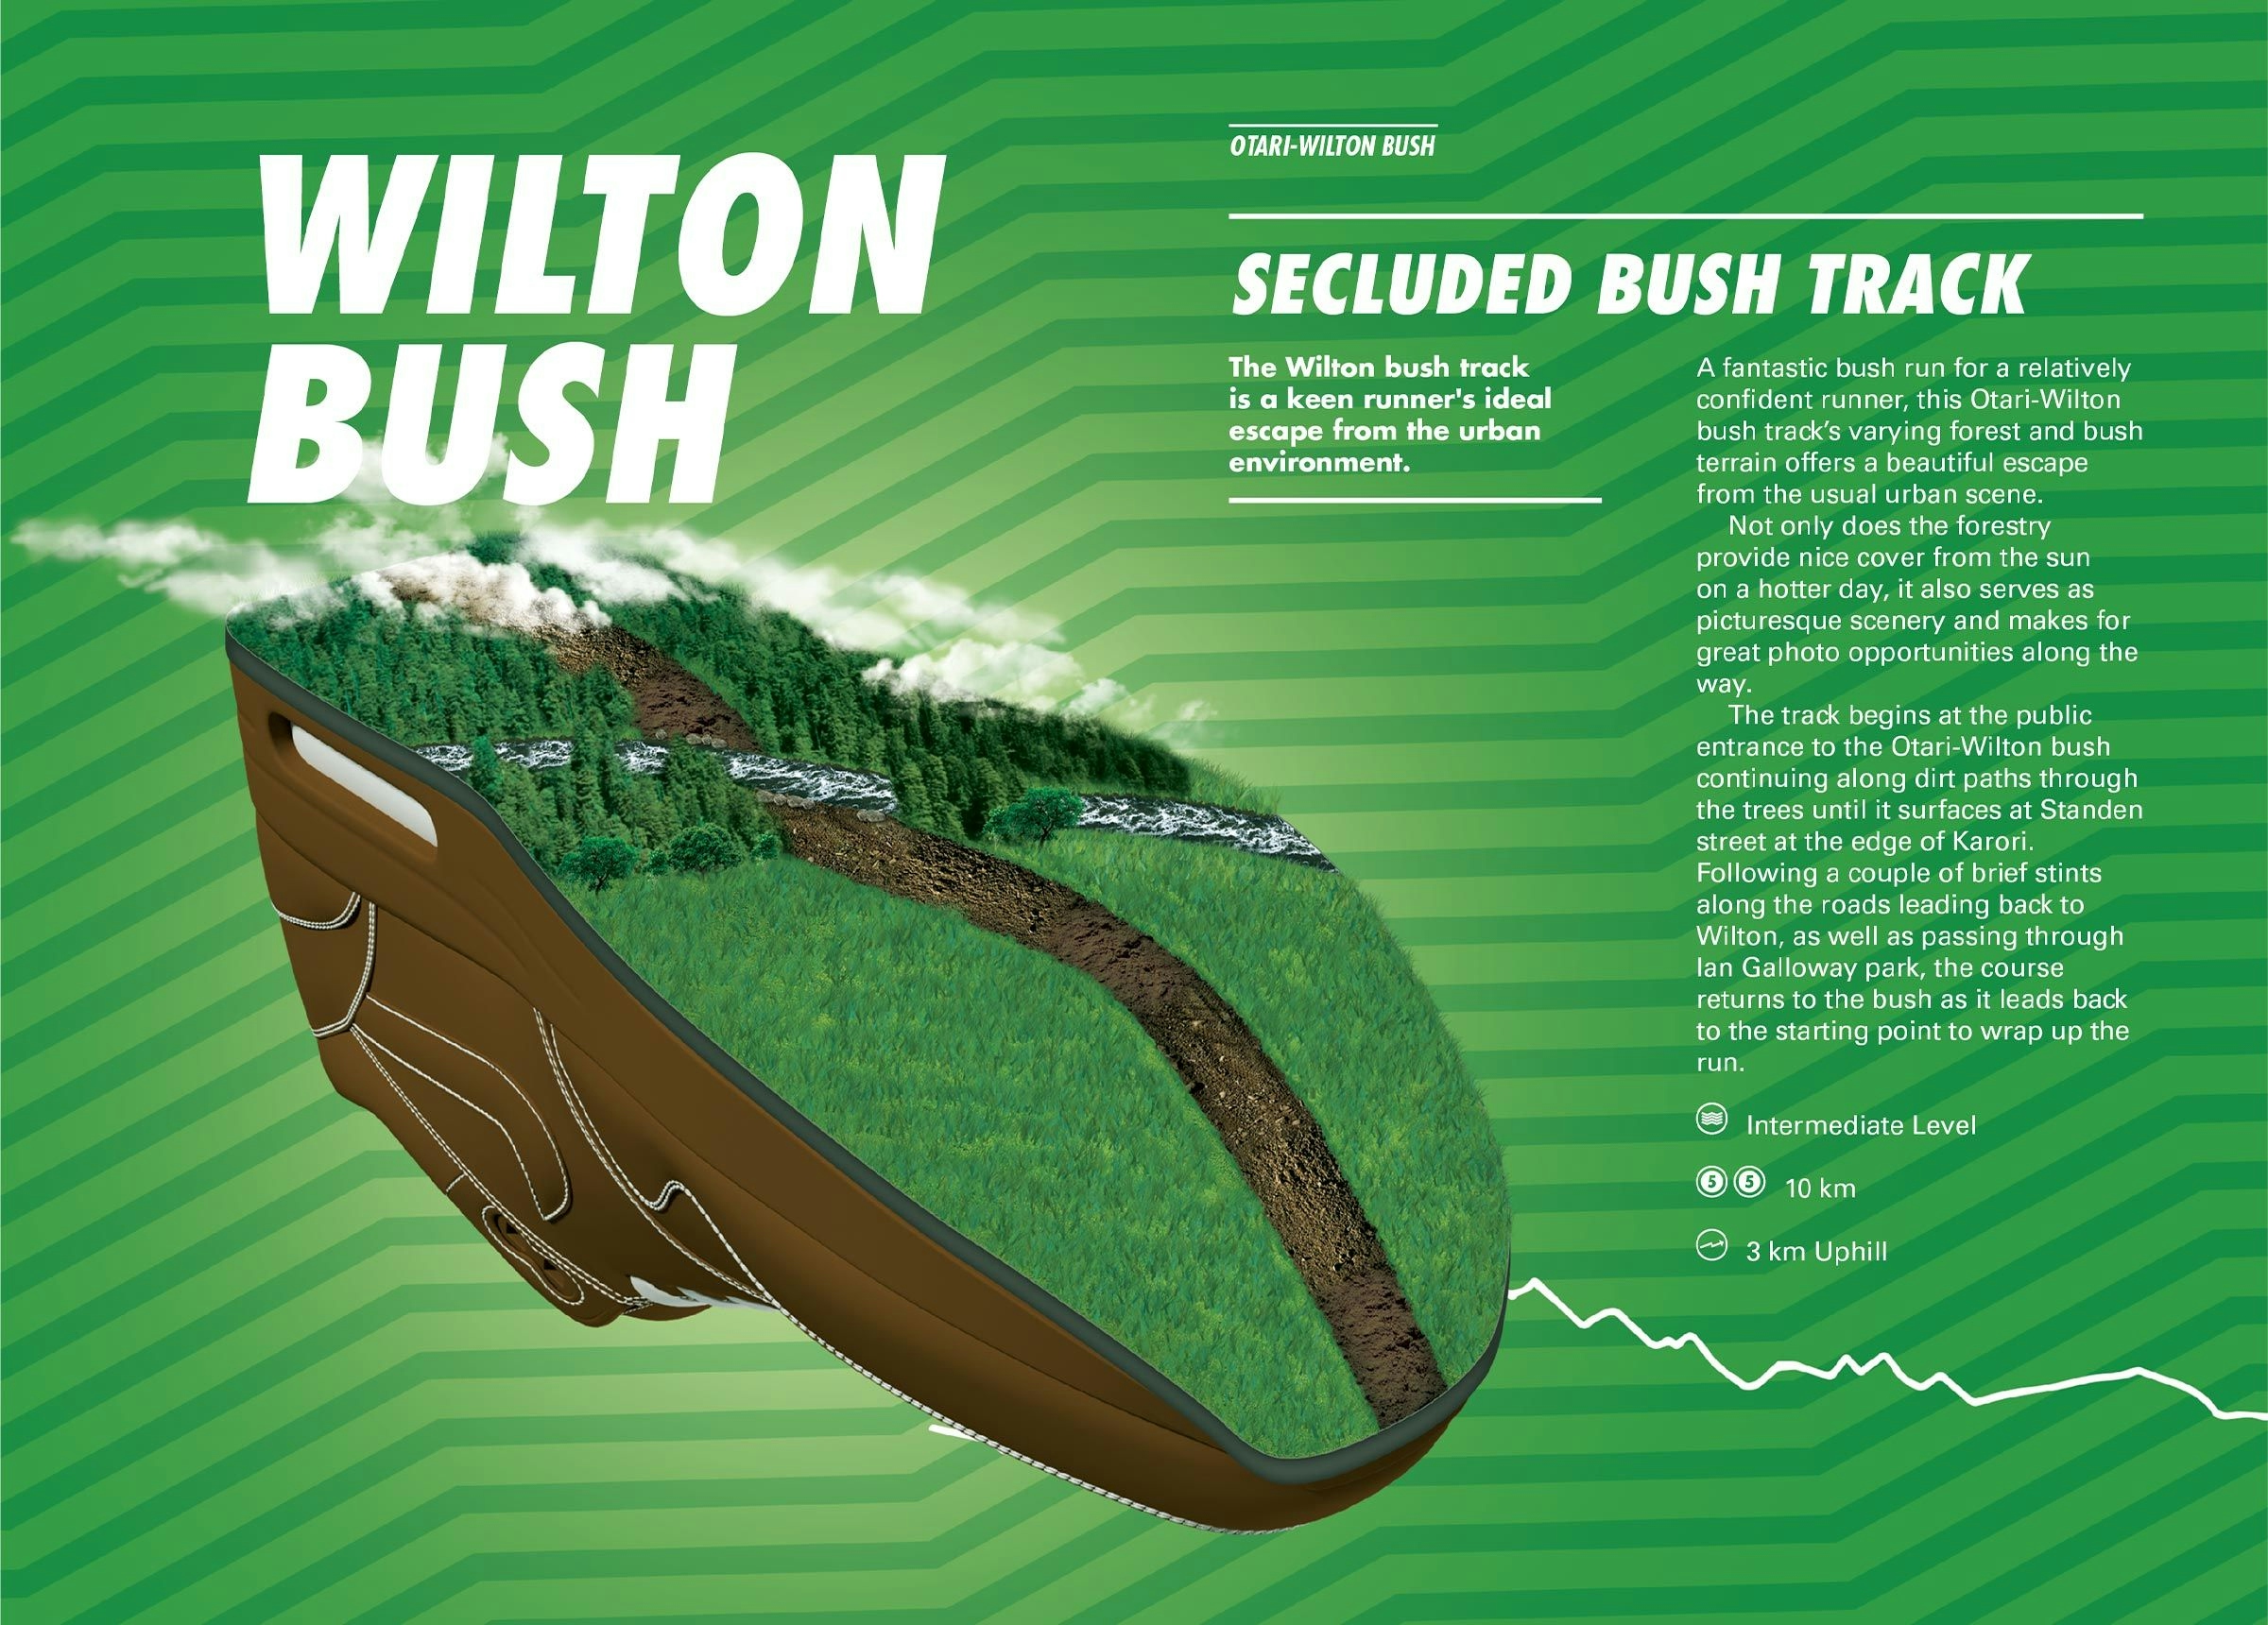 Secluded bush track: Wilton bush